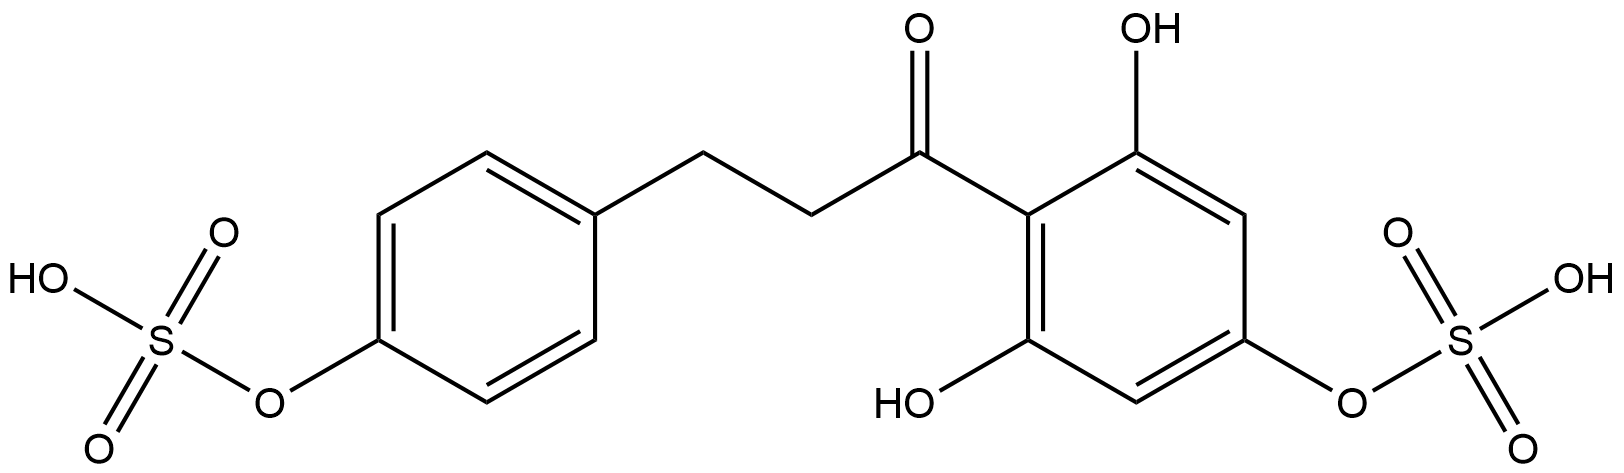 [R1]4,4'-phloretin bisulfate